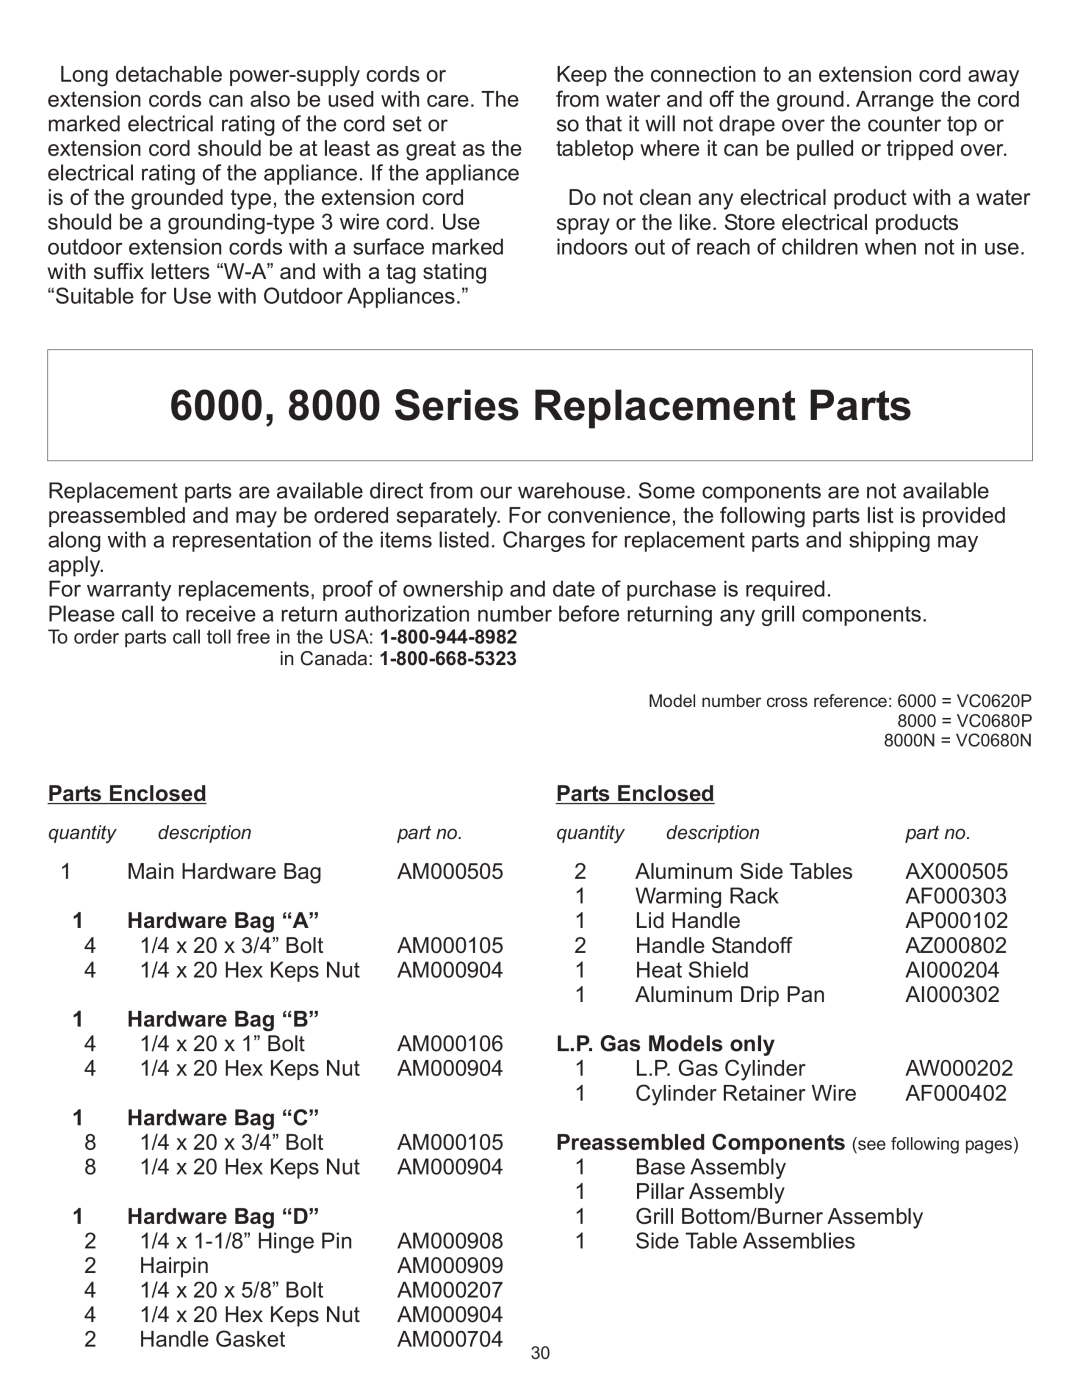 Vermont Casting VC0680P, VC0680N 6000, 8000 Series Replacement Parts, Parts Enclosed, Hardware Bag “A”, 1Hardware Bag “B” 